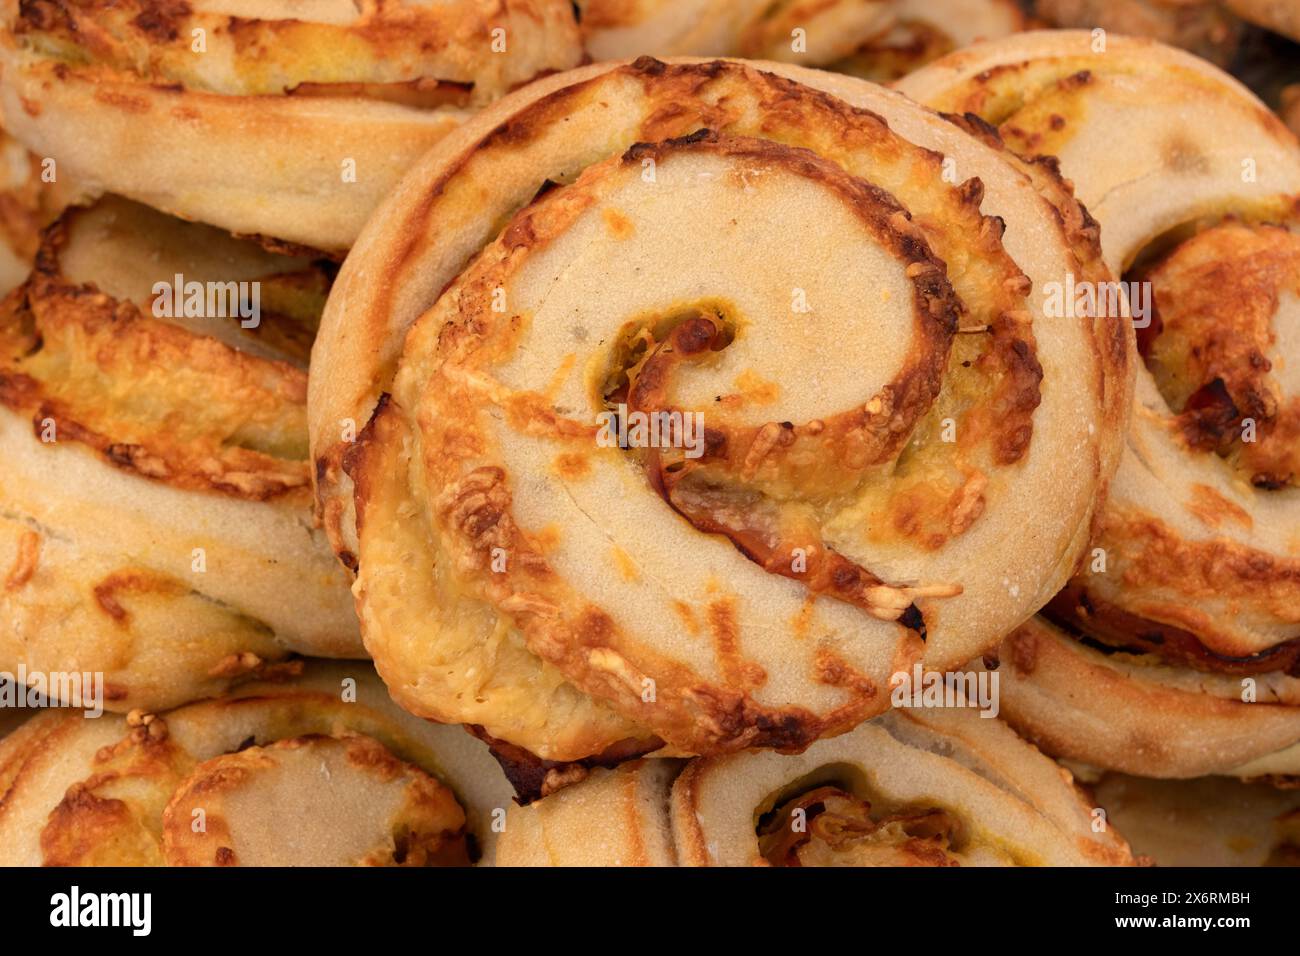 Frisch gebackene Käsebrötchen Brot Nahaufnahme Vollbild Nahaufnahme Stockfoto